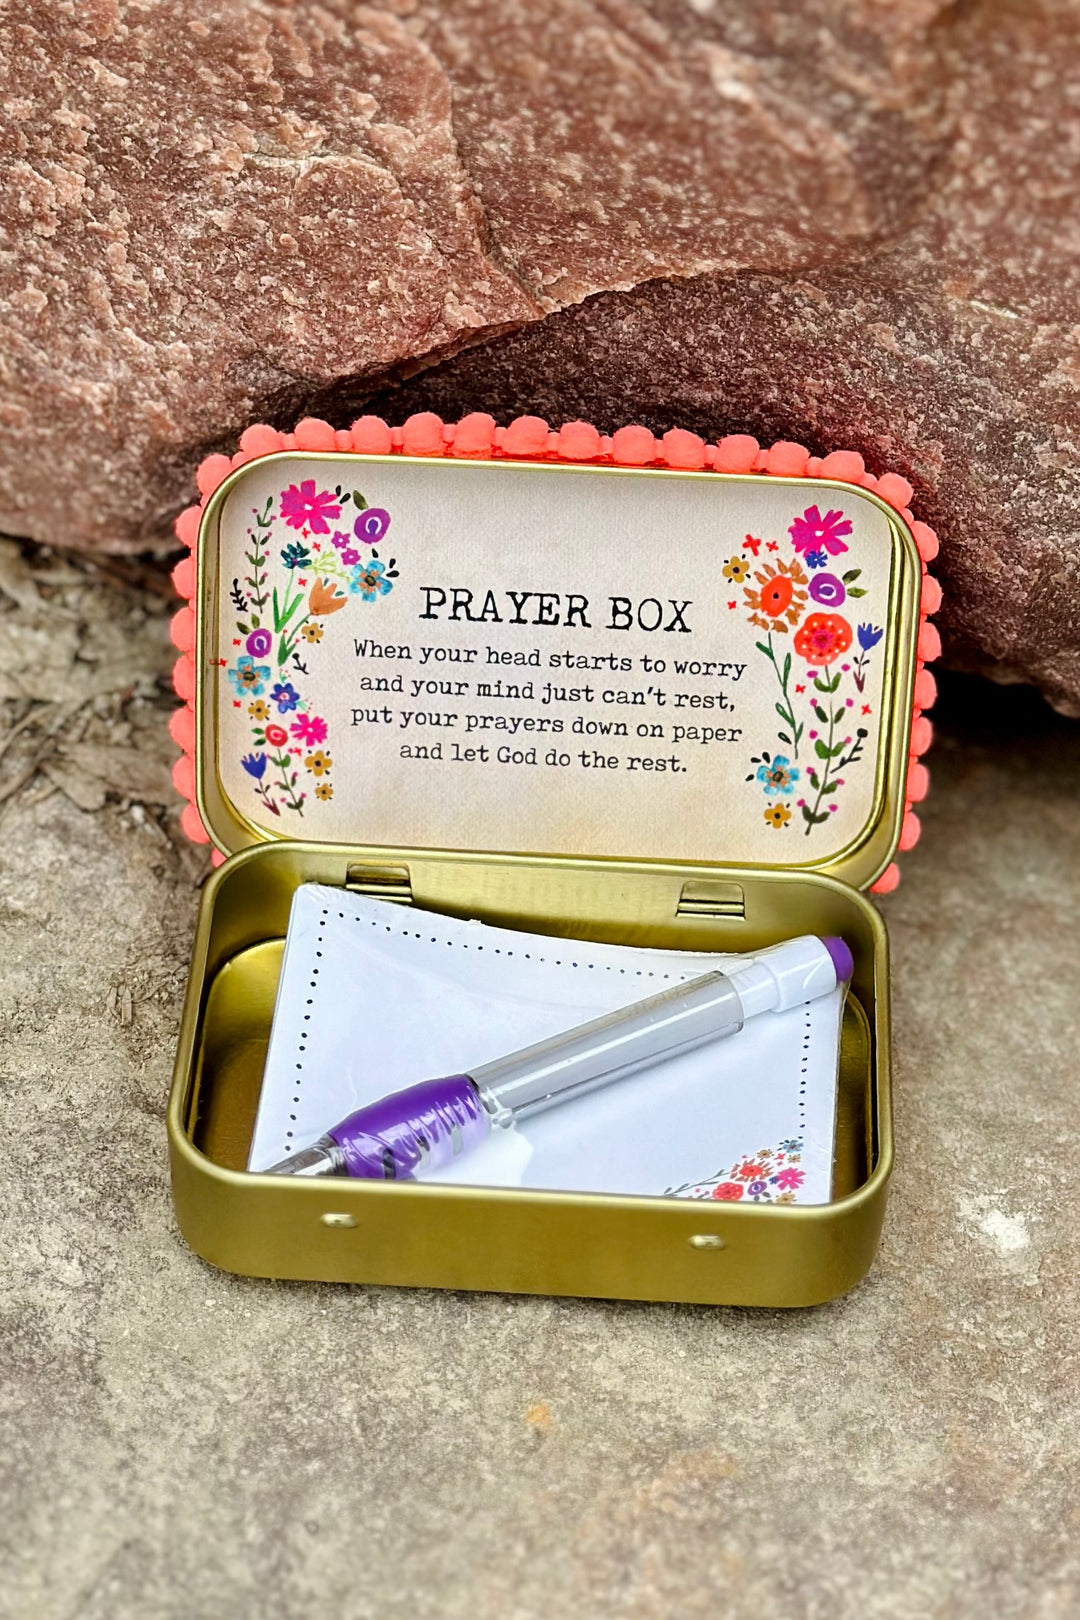 Prayer Box - Sometime I Just Look